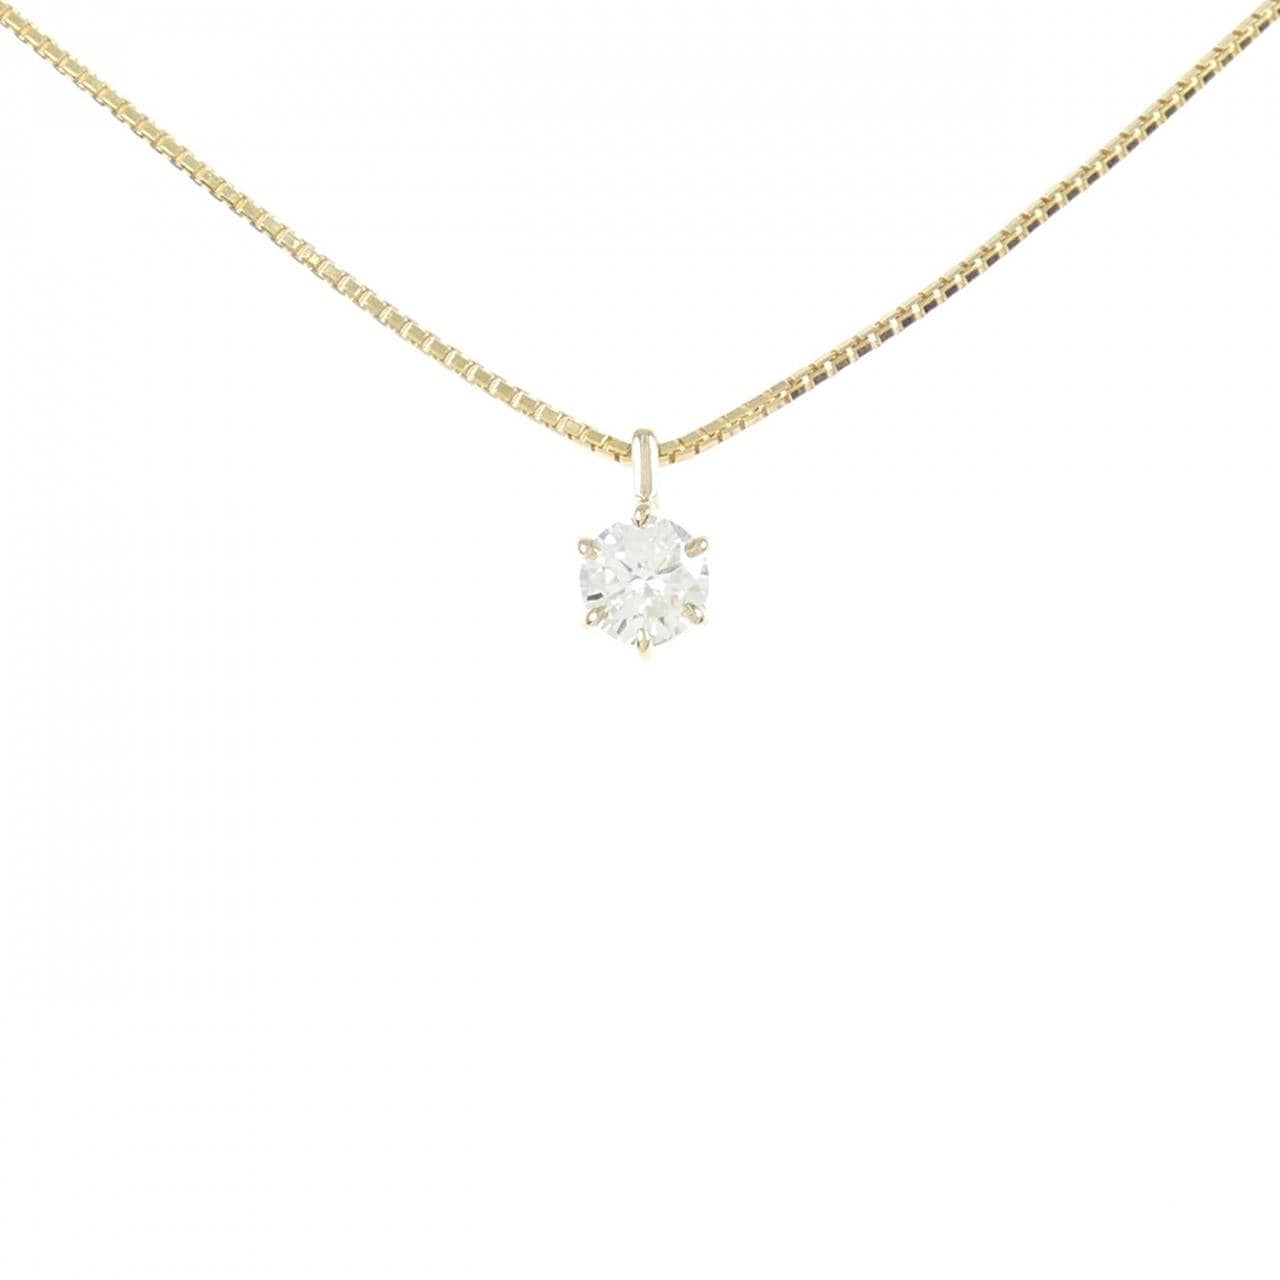 K18YG Diamond Necklace 0.447CT G VS1 Good